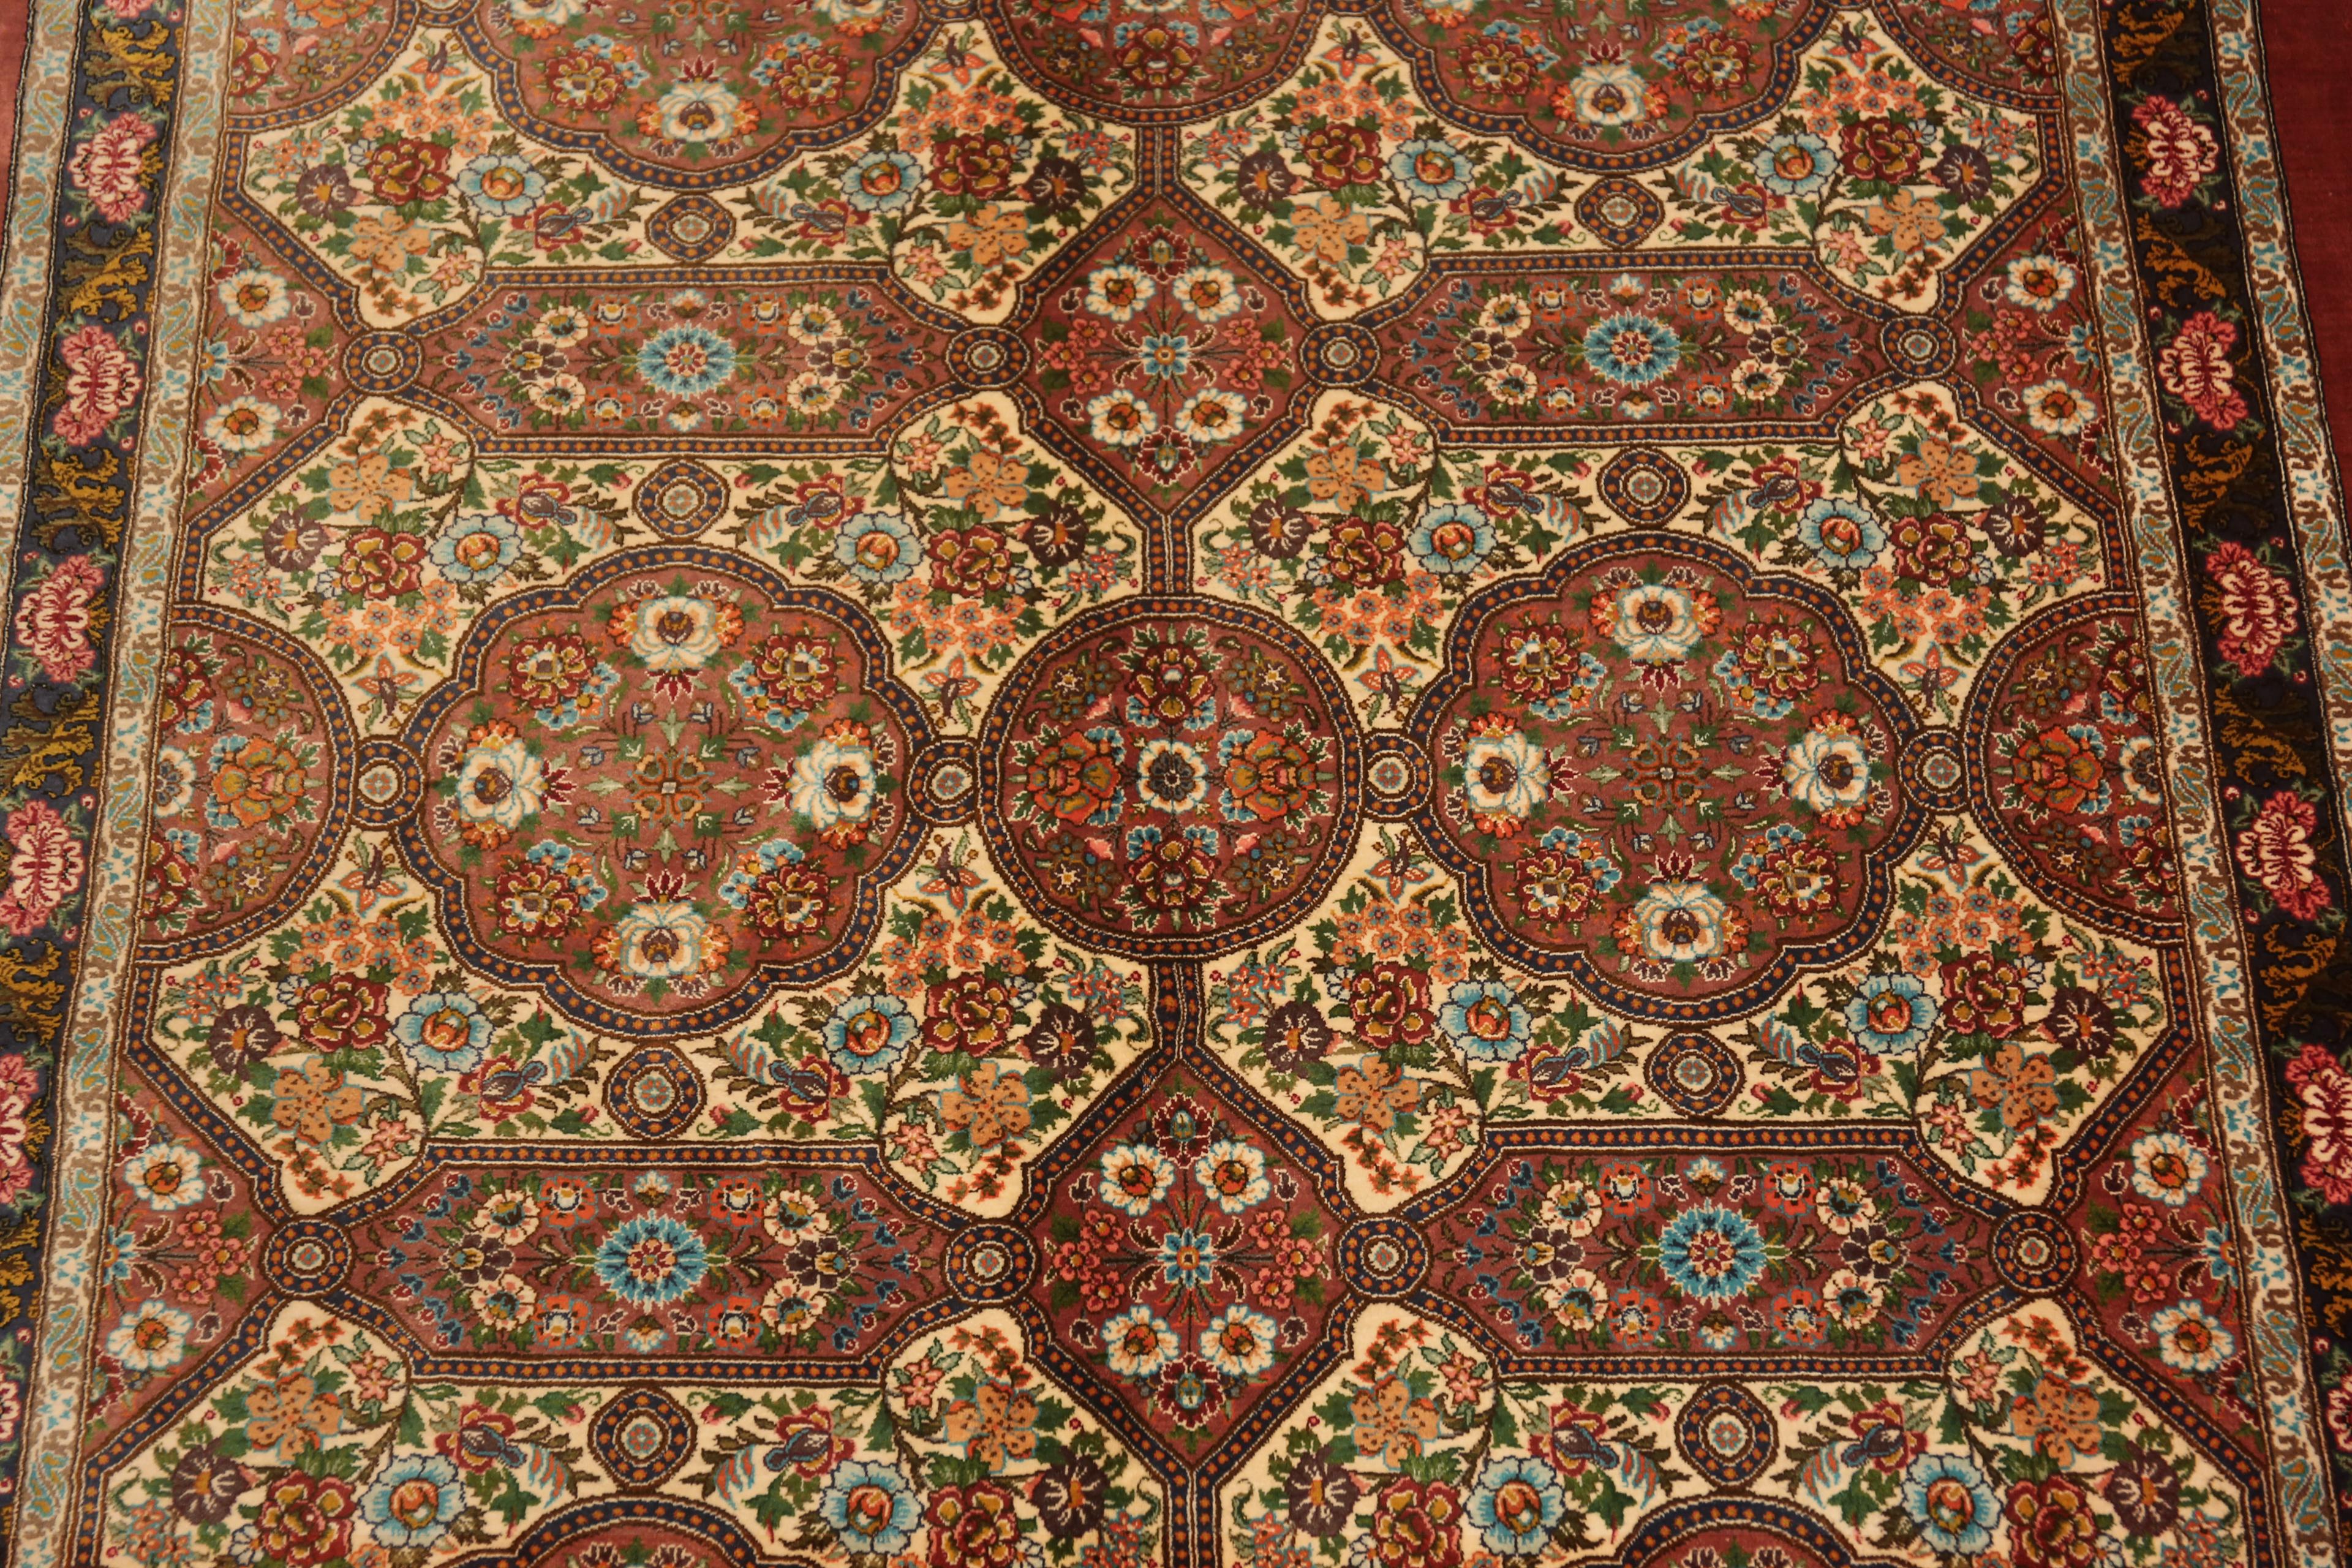 Magnificent Intricate Floral Vintage Persian Silk Qum Runner Rug 3'7